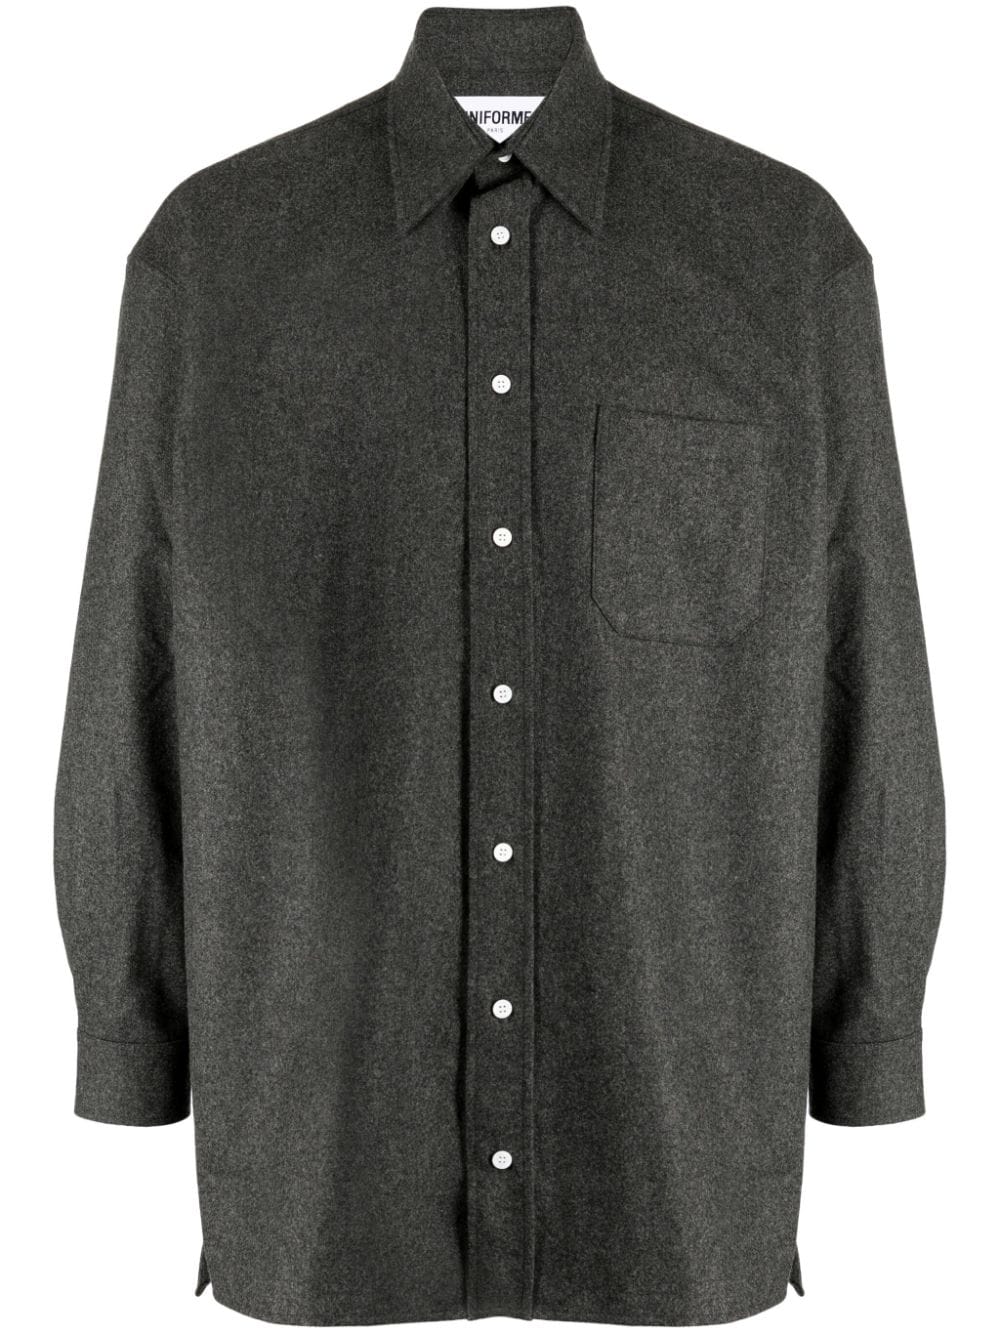 UNIFORME long-sleeve virgin wool shirt - Grey von UNIFORME